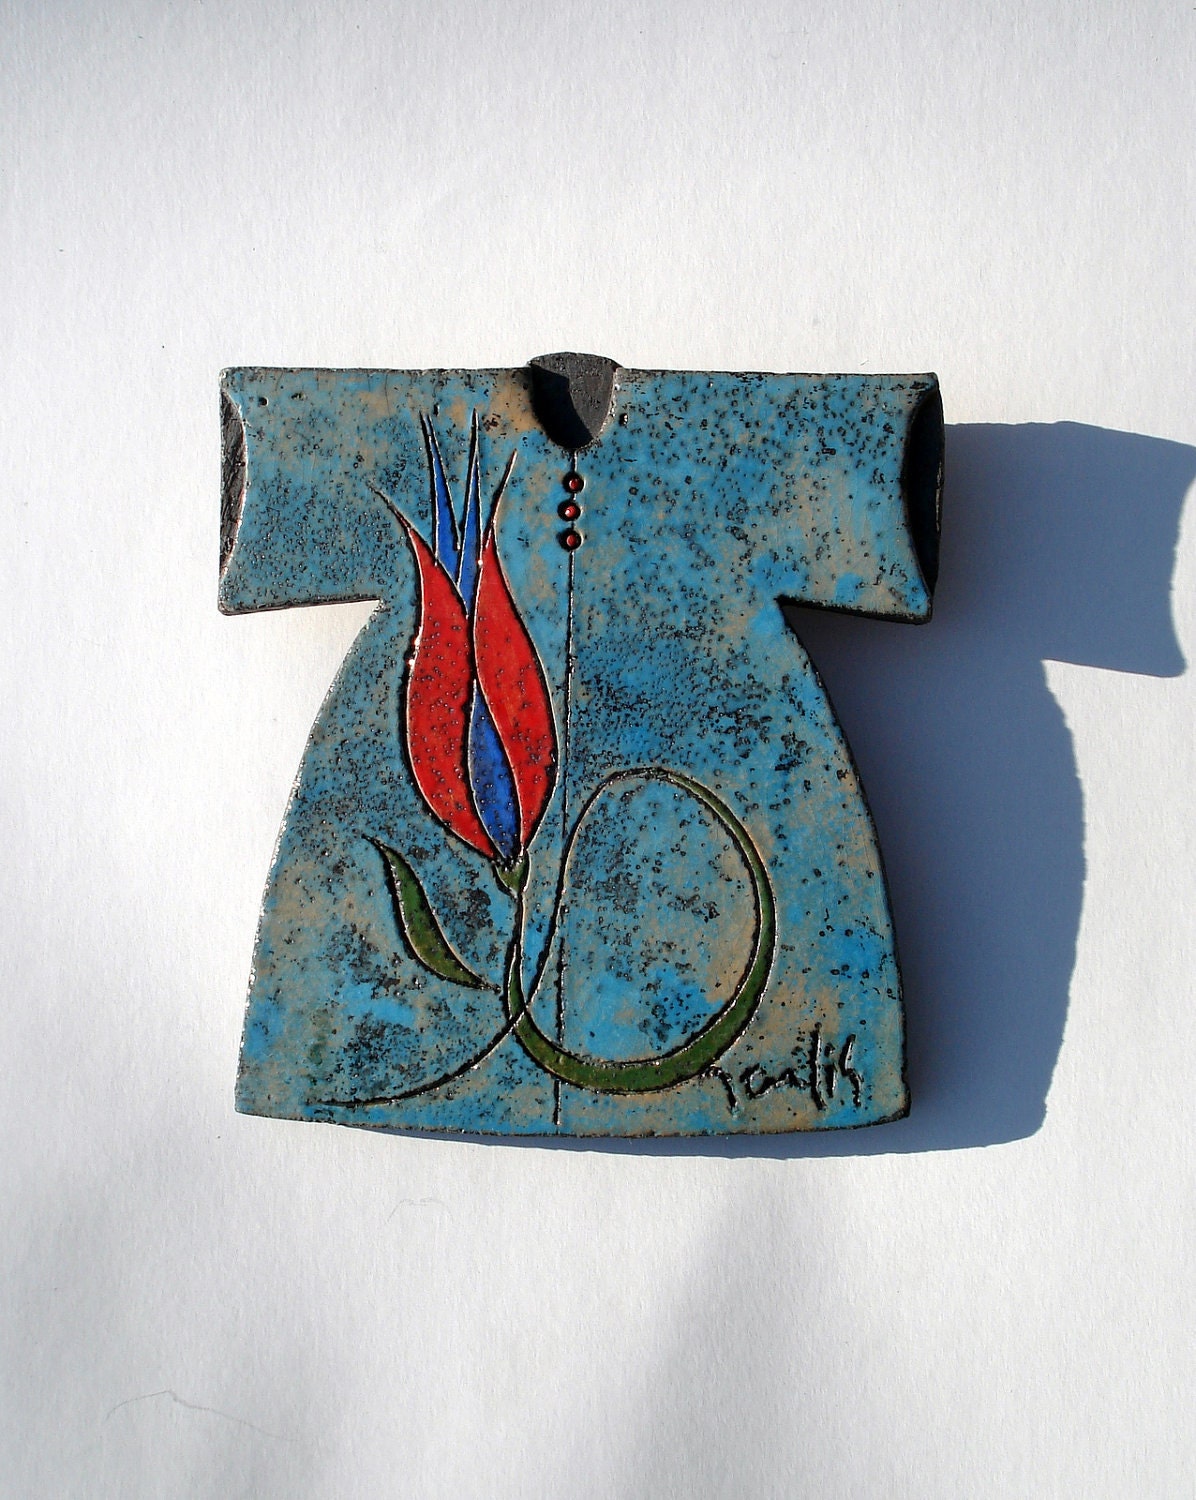 Raku Fired Blue Ceramic Caftan with Red Tulip